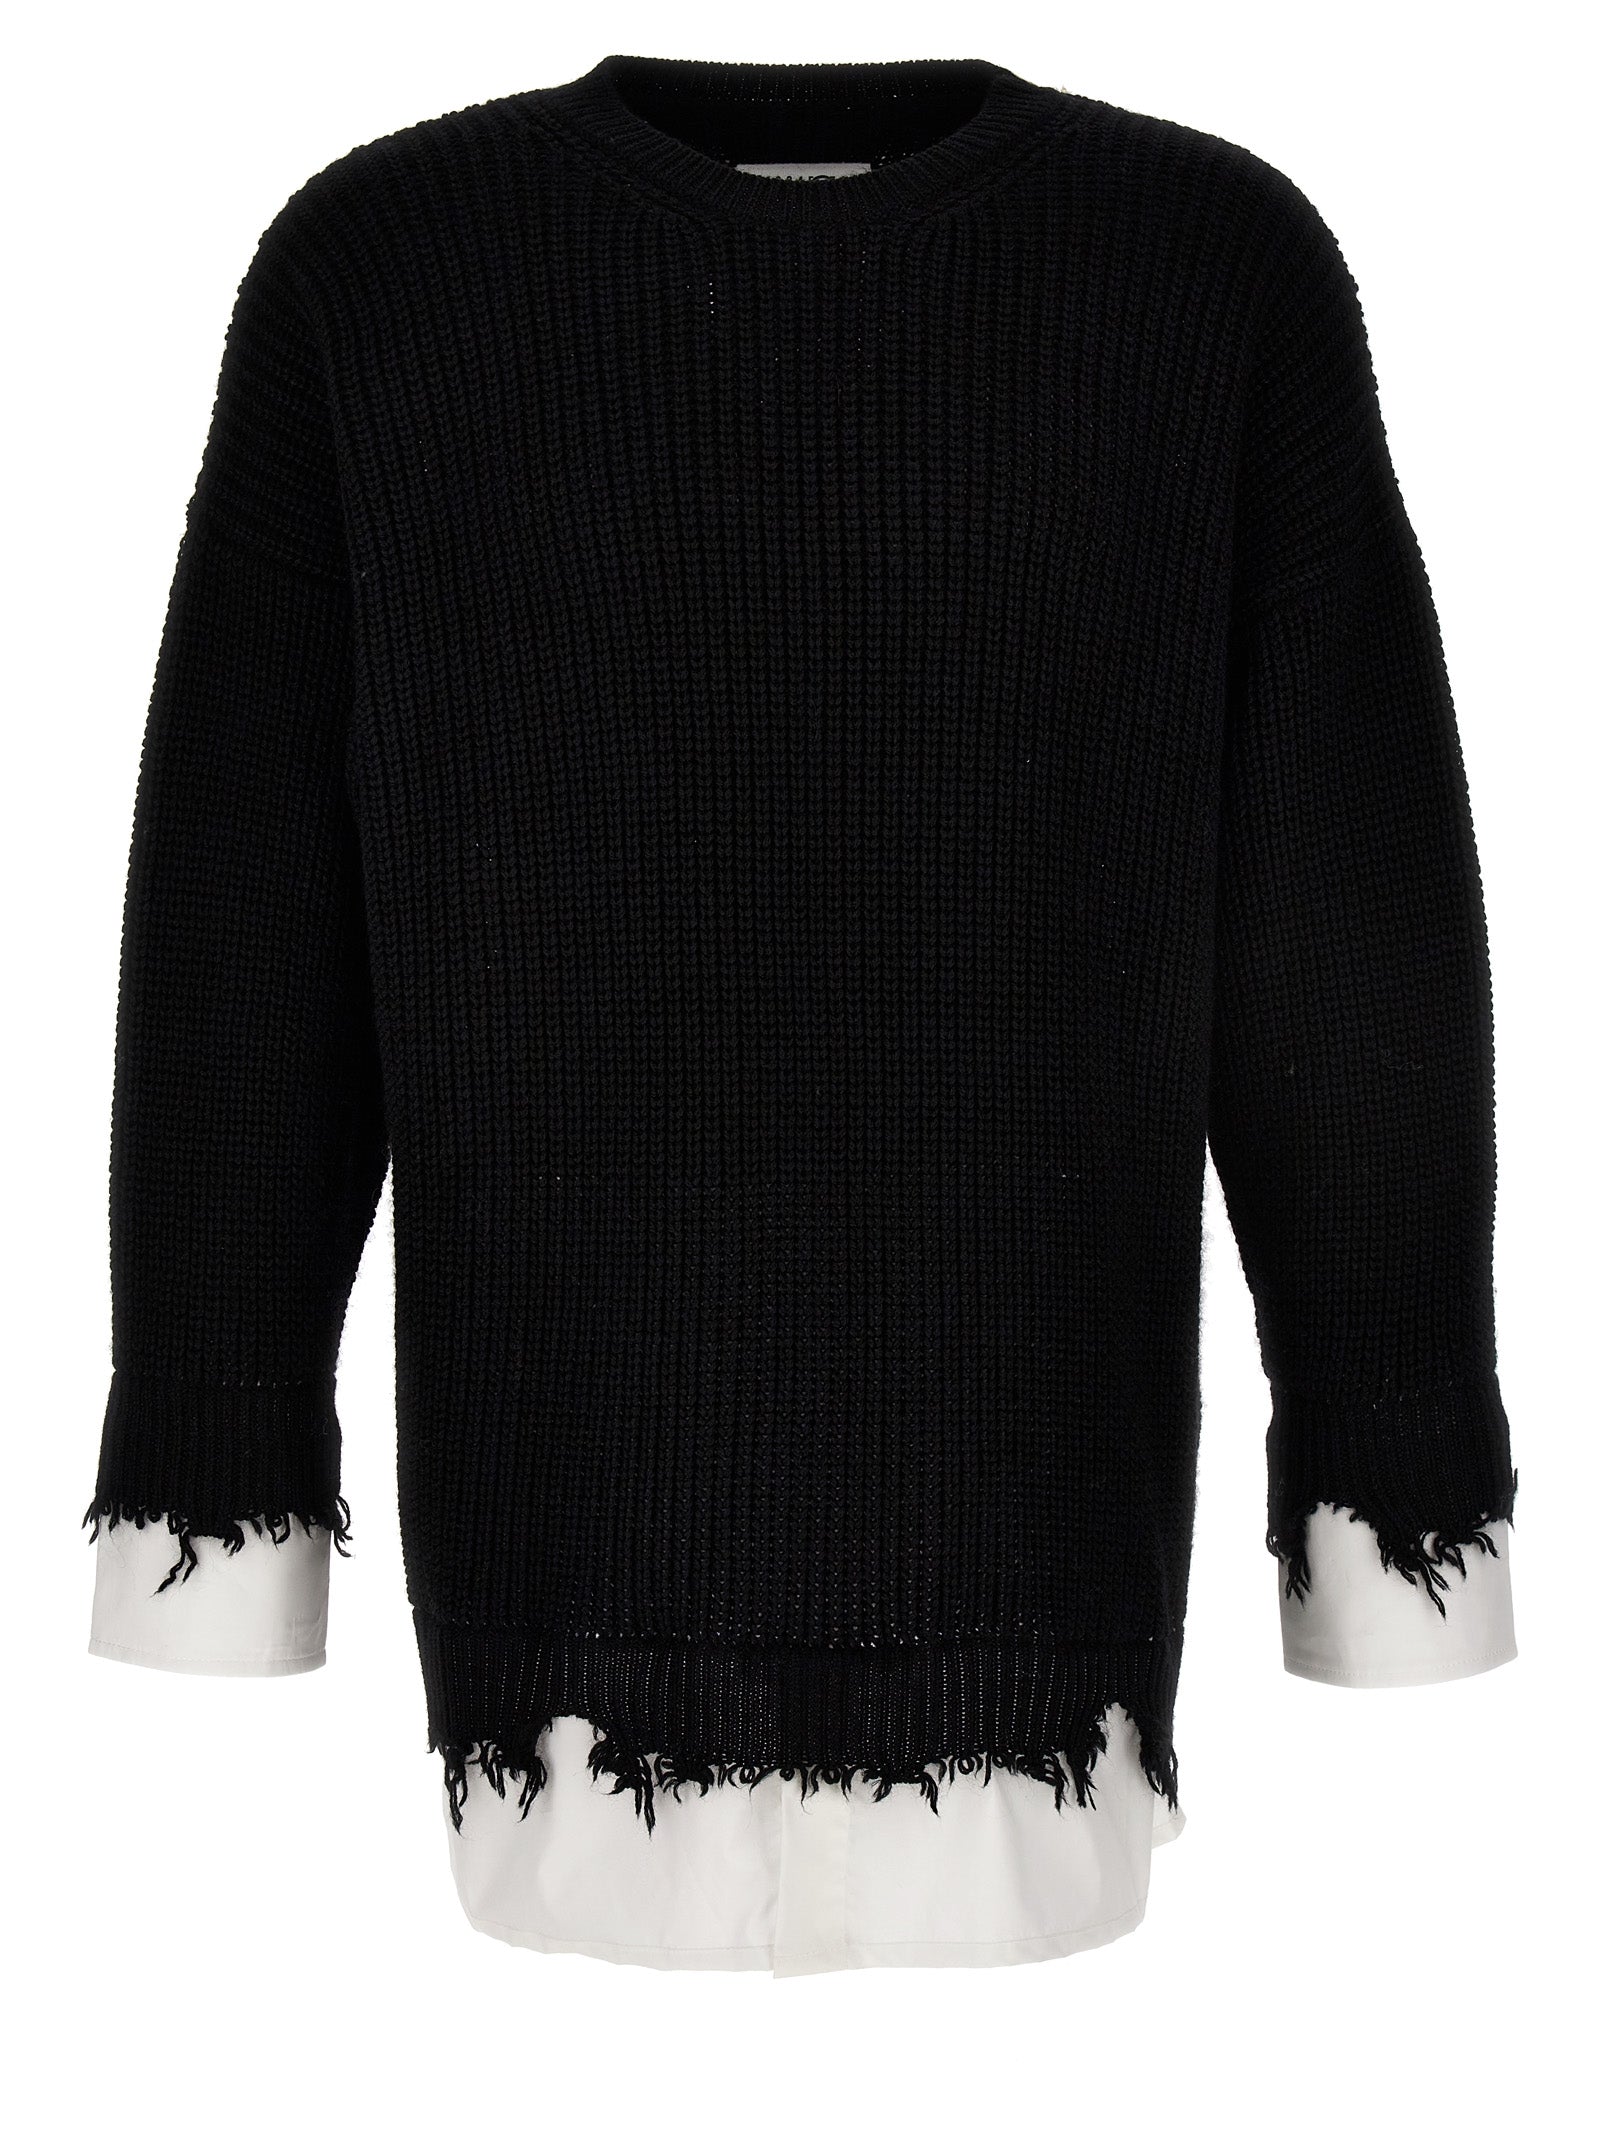 Mm6 Maison Margiela-Shirt Insert Sweater Maglioni Bianco/Nero-Uomo